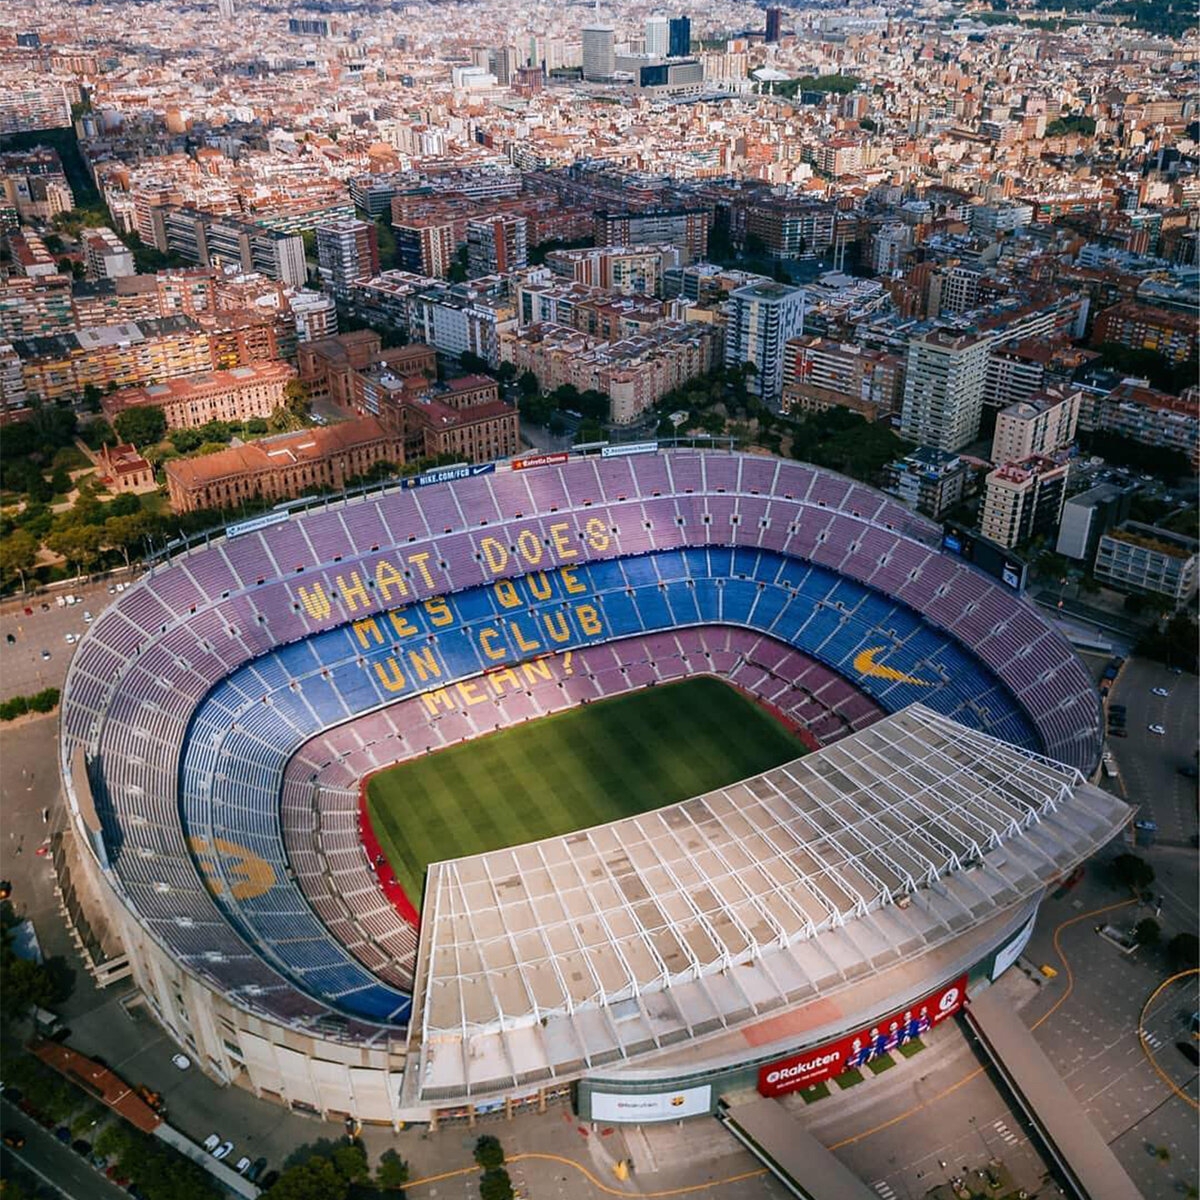 Камп ноу стадион. Стадион Камп ноу в Барселоне. Стадион Camp nou. Барселона футбольный стадион Камп ноу.